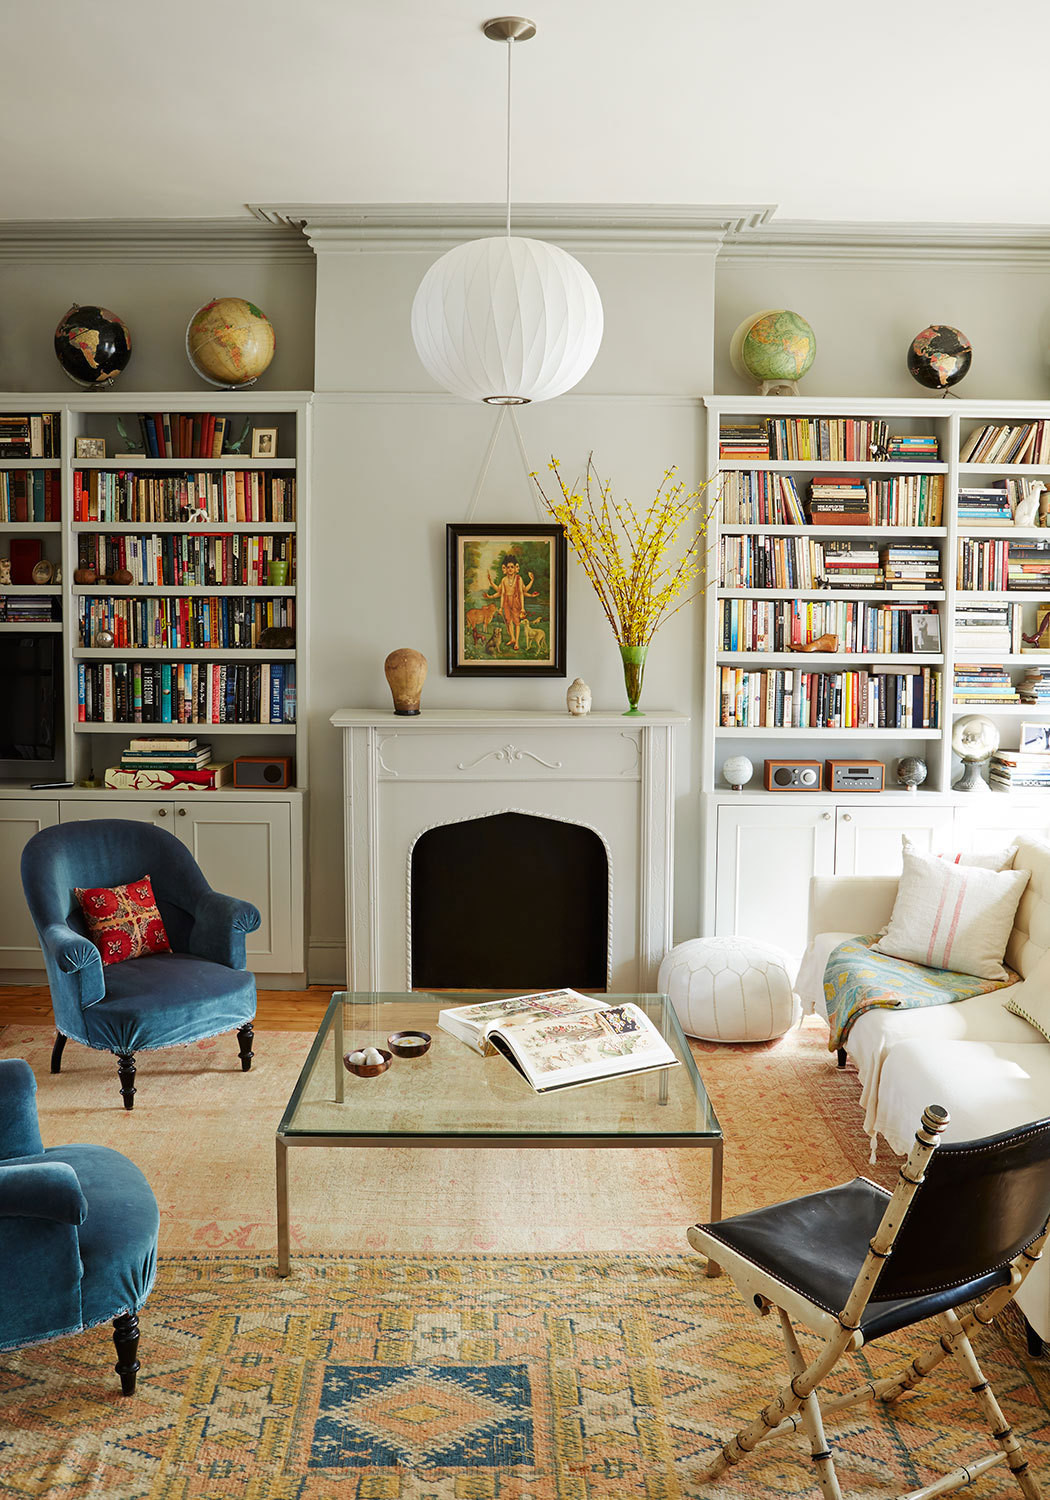 25 Eclectic Living Room Design Ideas - Decoration Love